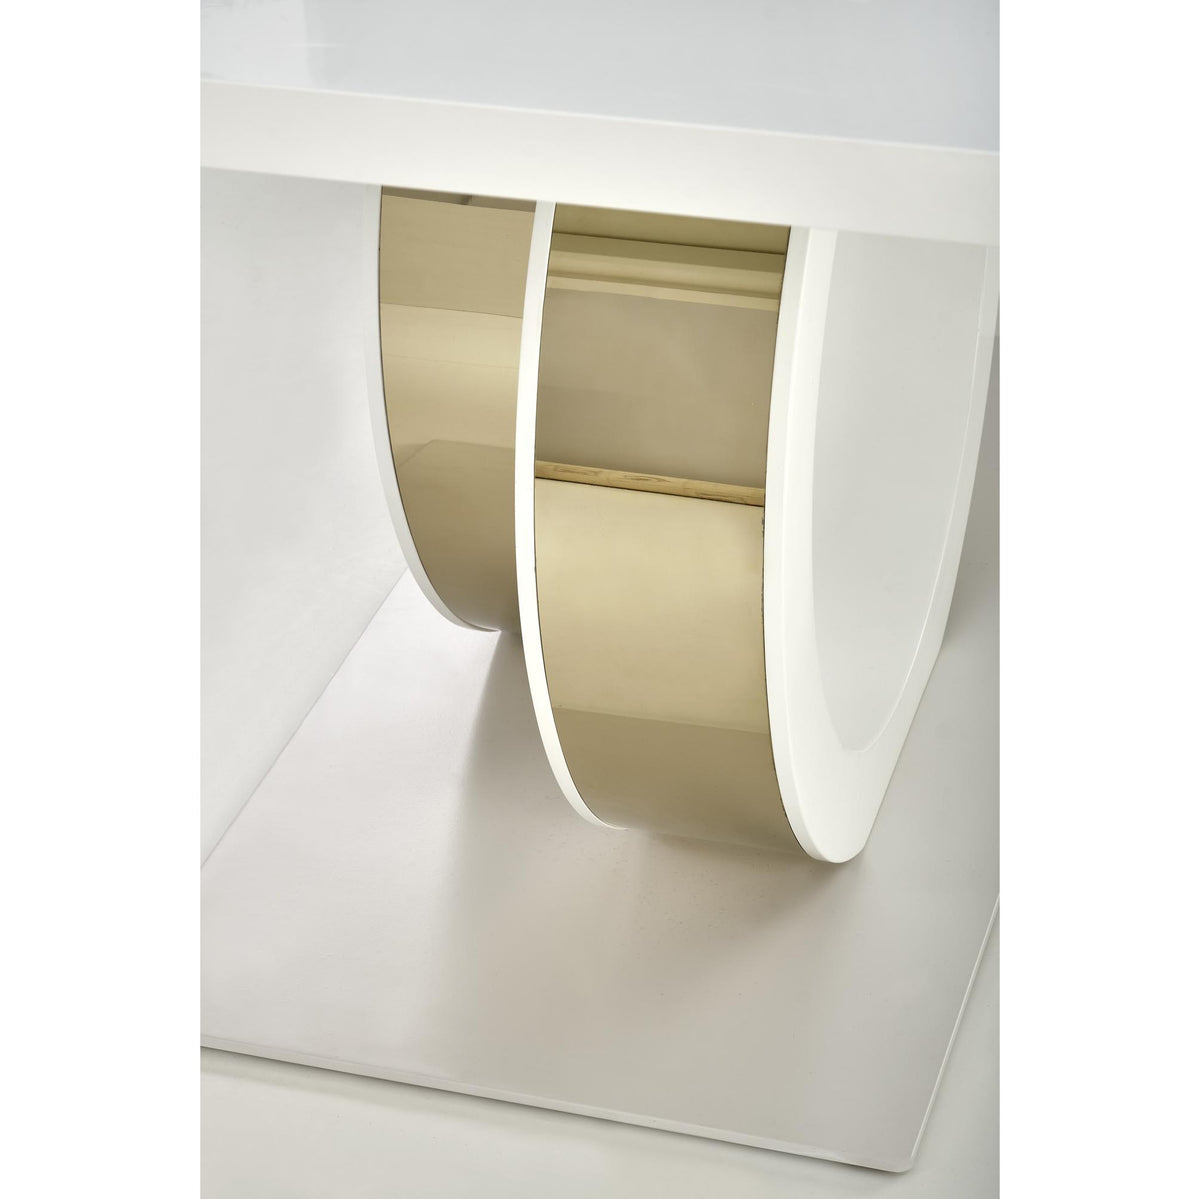 Jídelní stůl Haraldo rozkládací 160-200x76,5x90 cm (bílá)